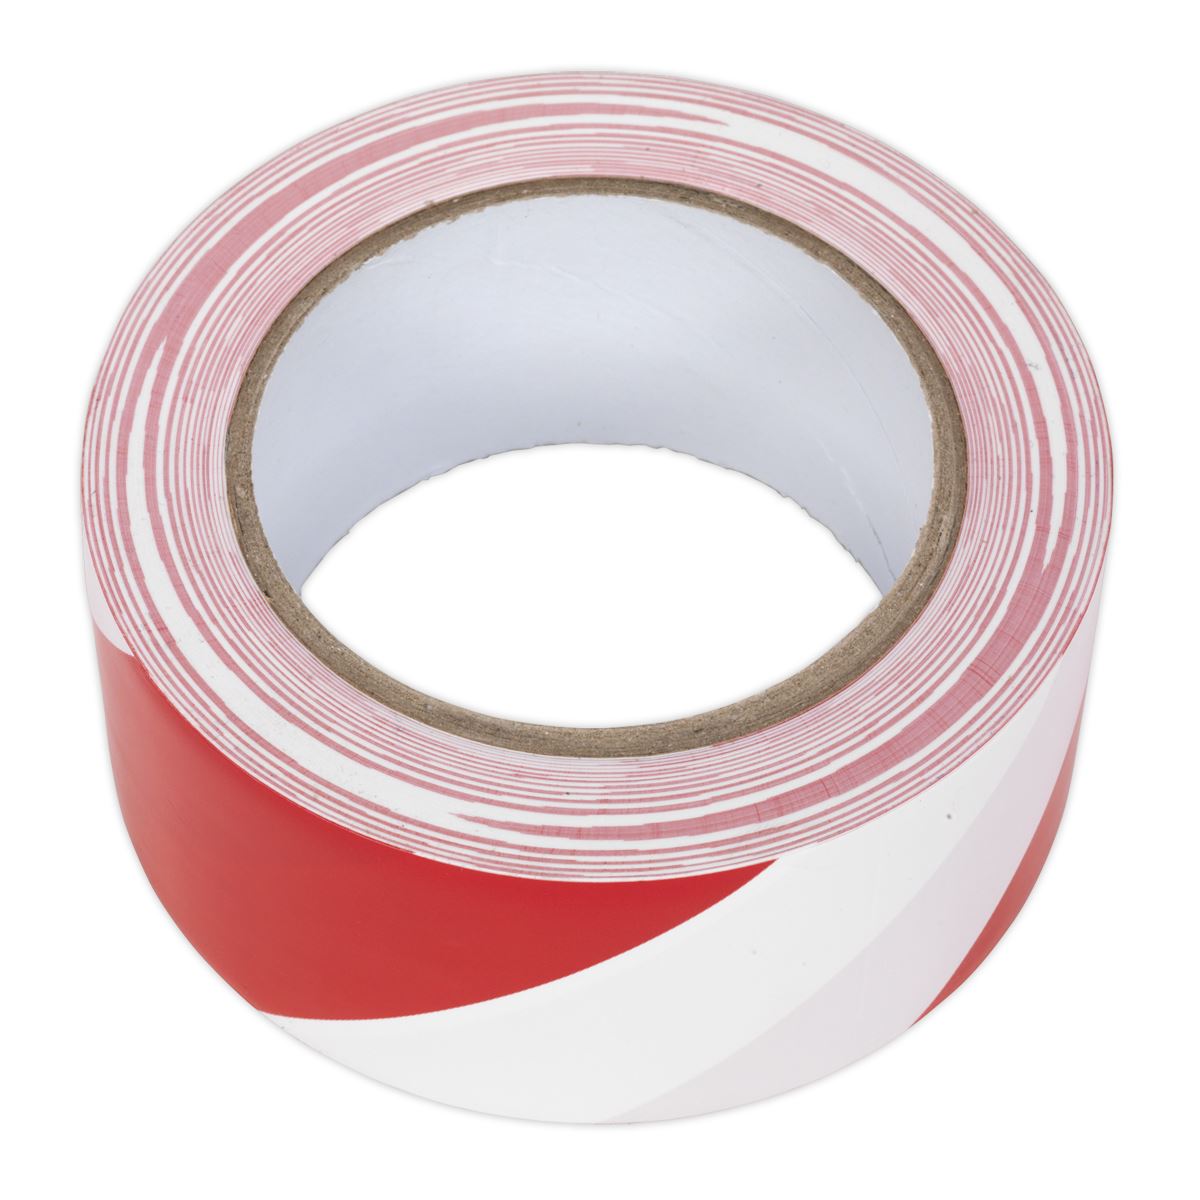 Sealey Hazard Warning Tape 50mm x 33m Red/White